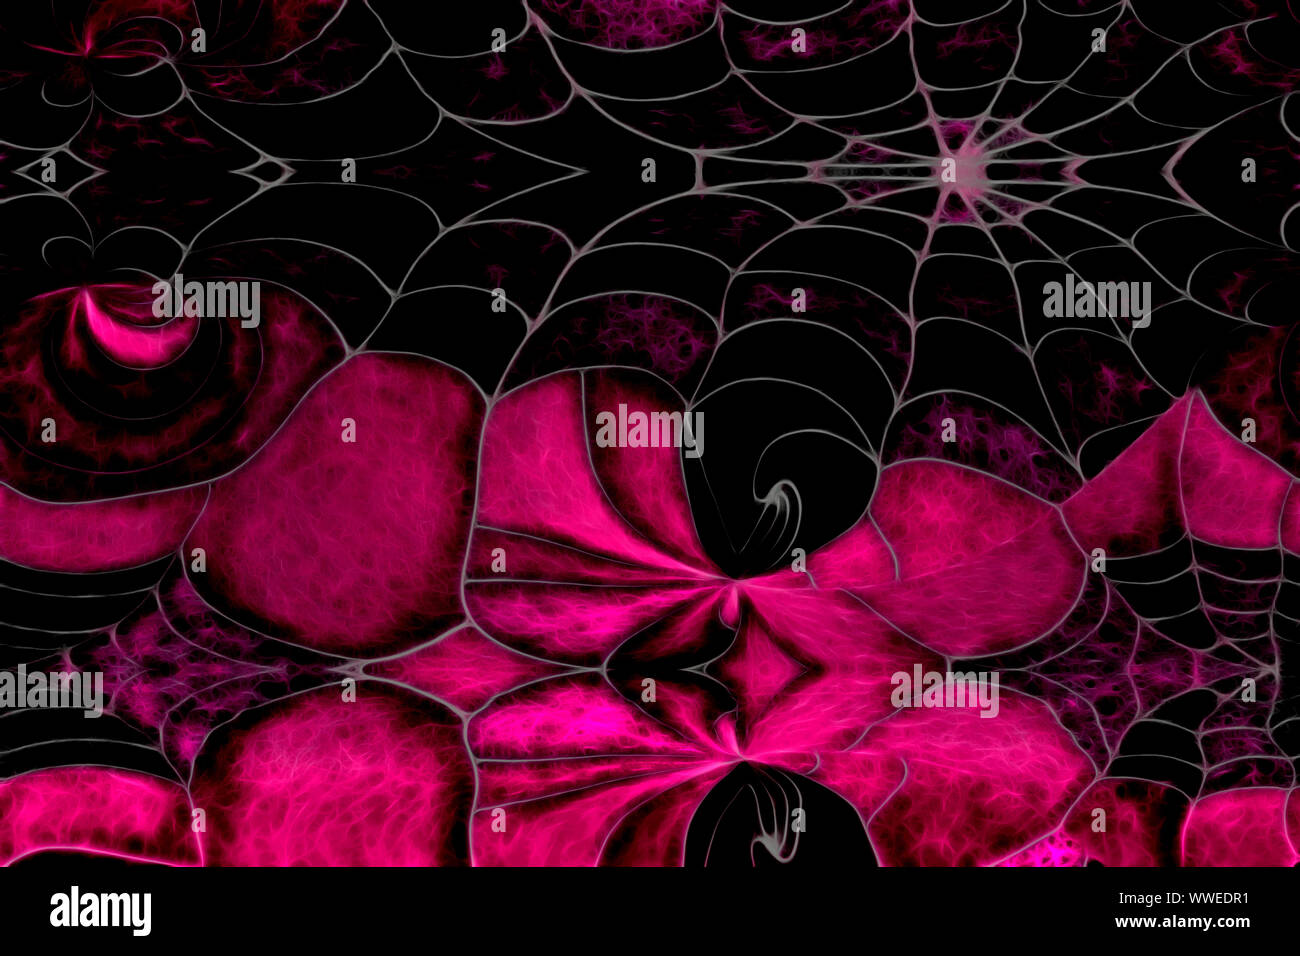 Spiderweb, Photocollage, illustriert Stock Photo